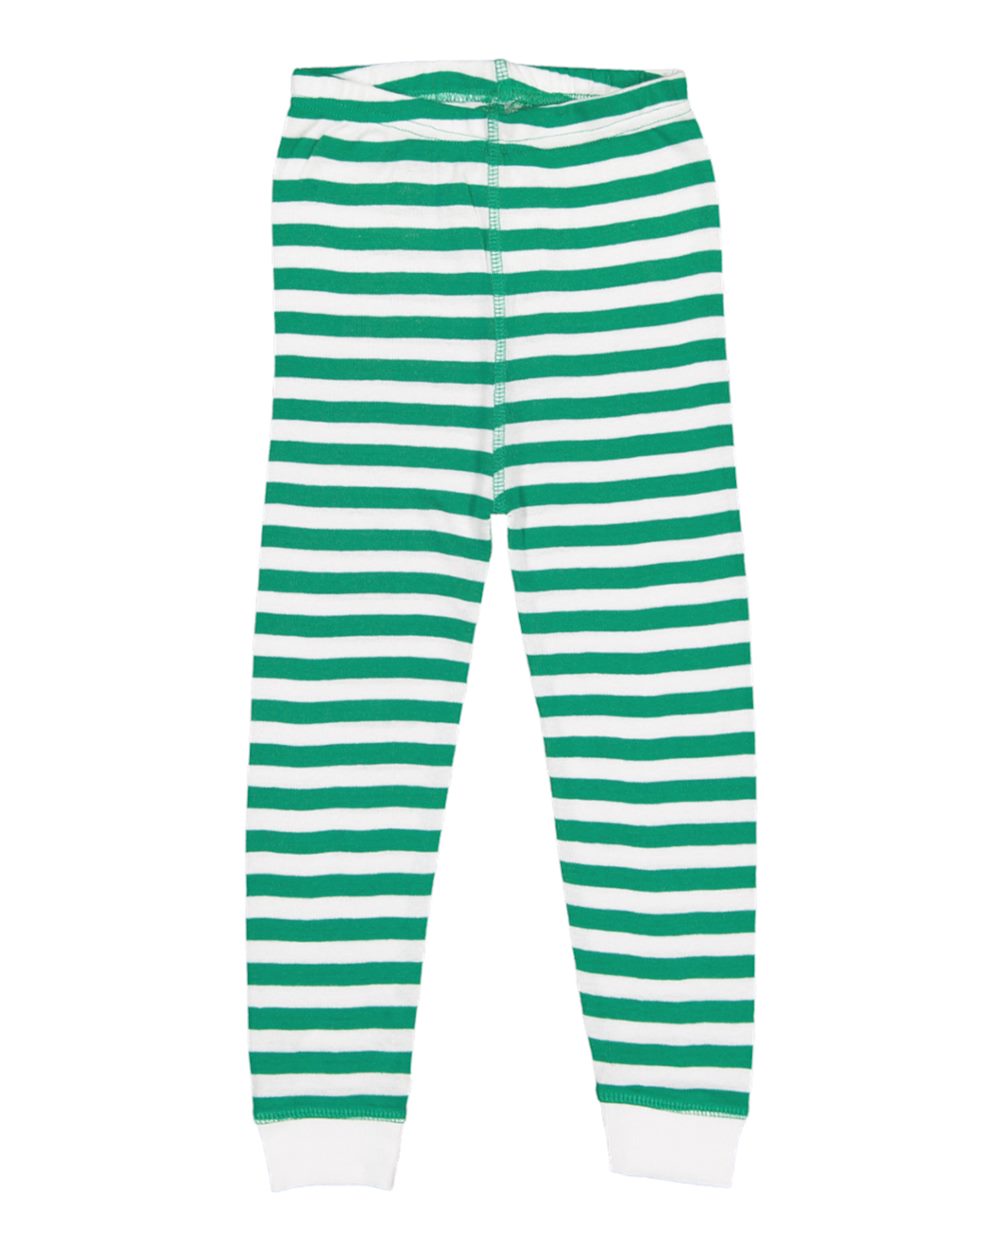 Toddler Holiday PJ Pants